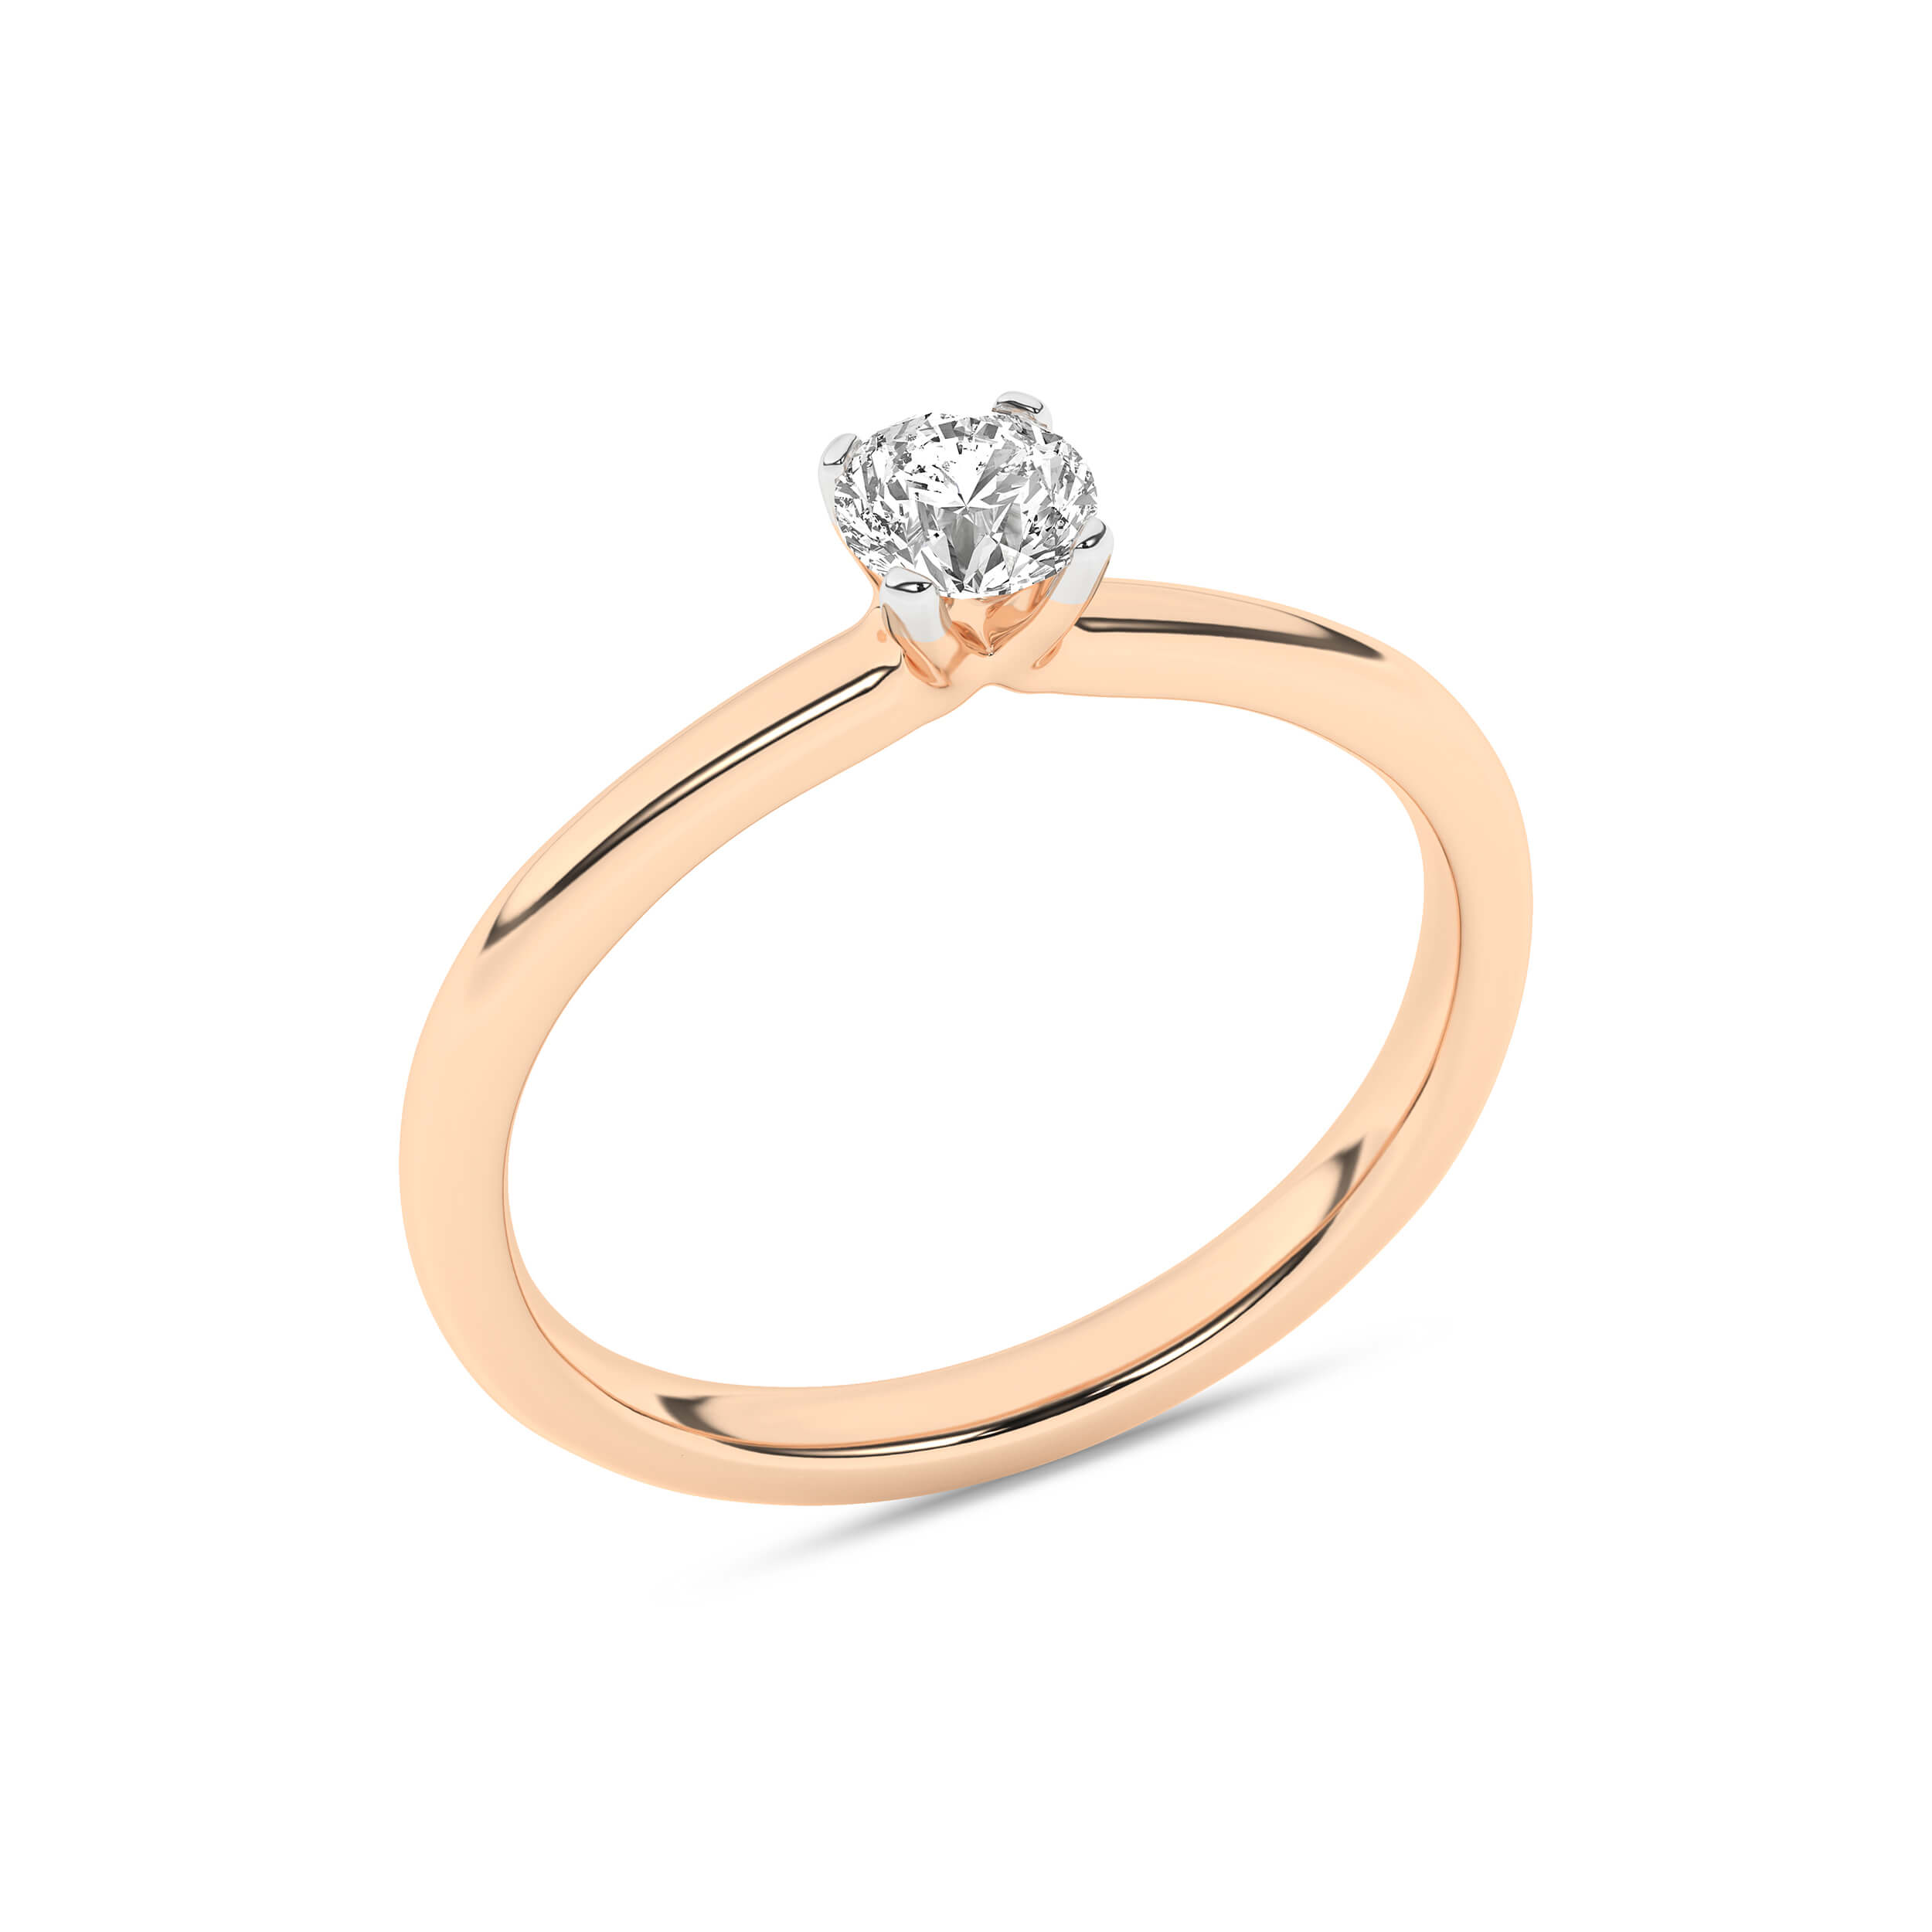 Inel de logodna din Aur Roz 14K cu Diamant 0.33Ct, articol RS0910, previzualizare foto 5